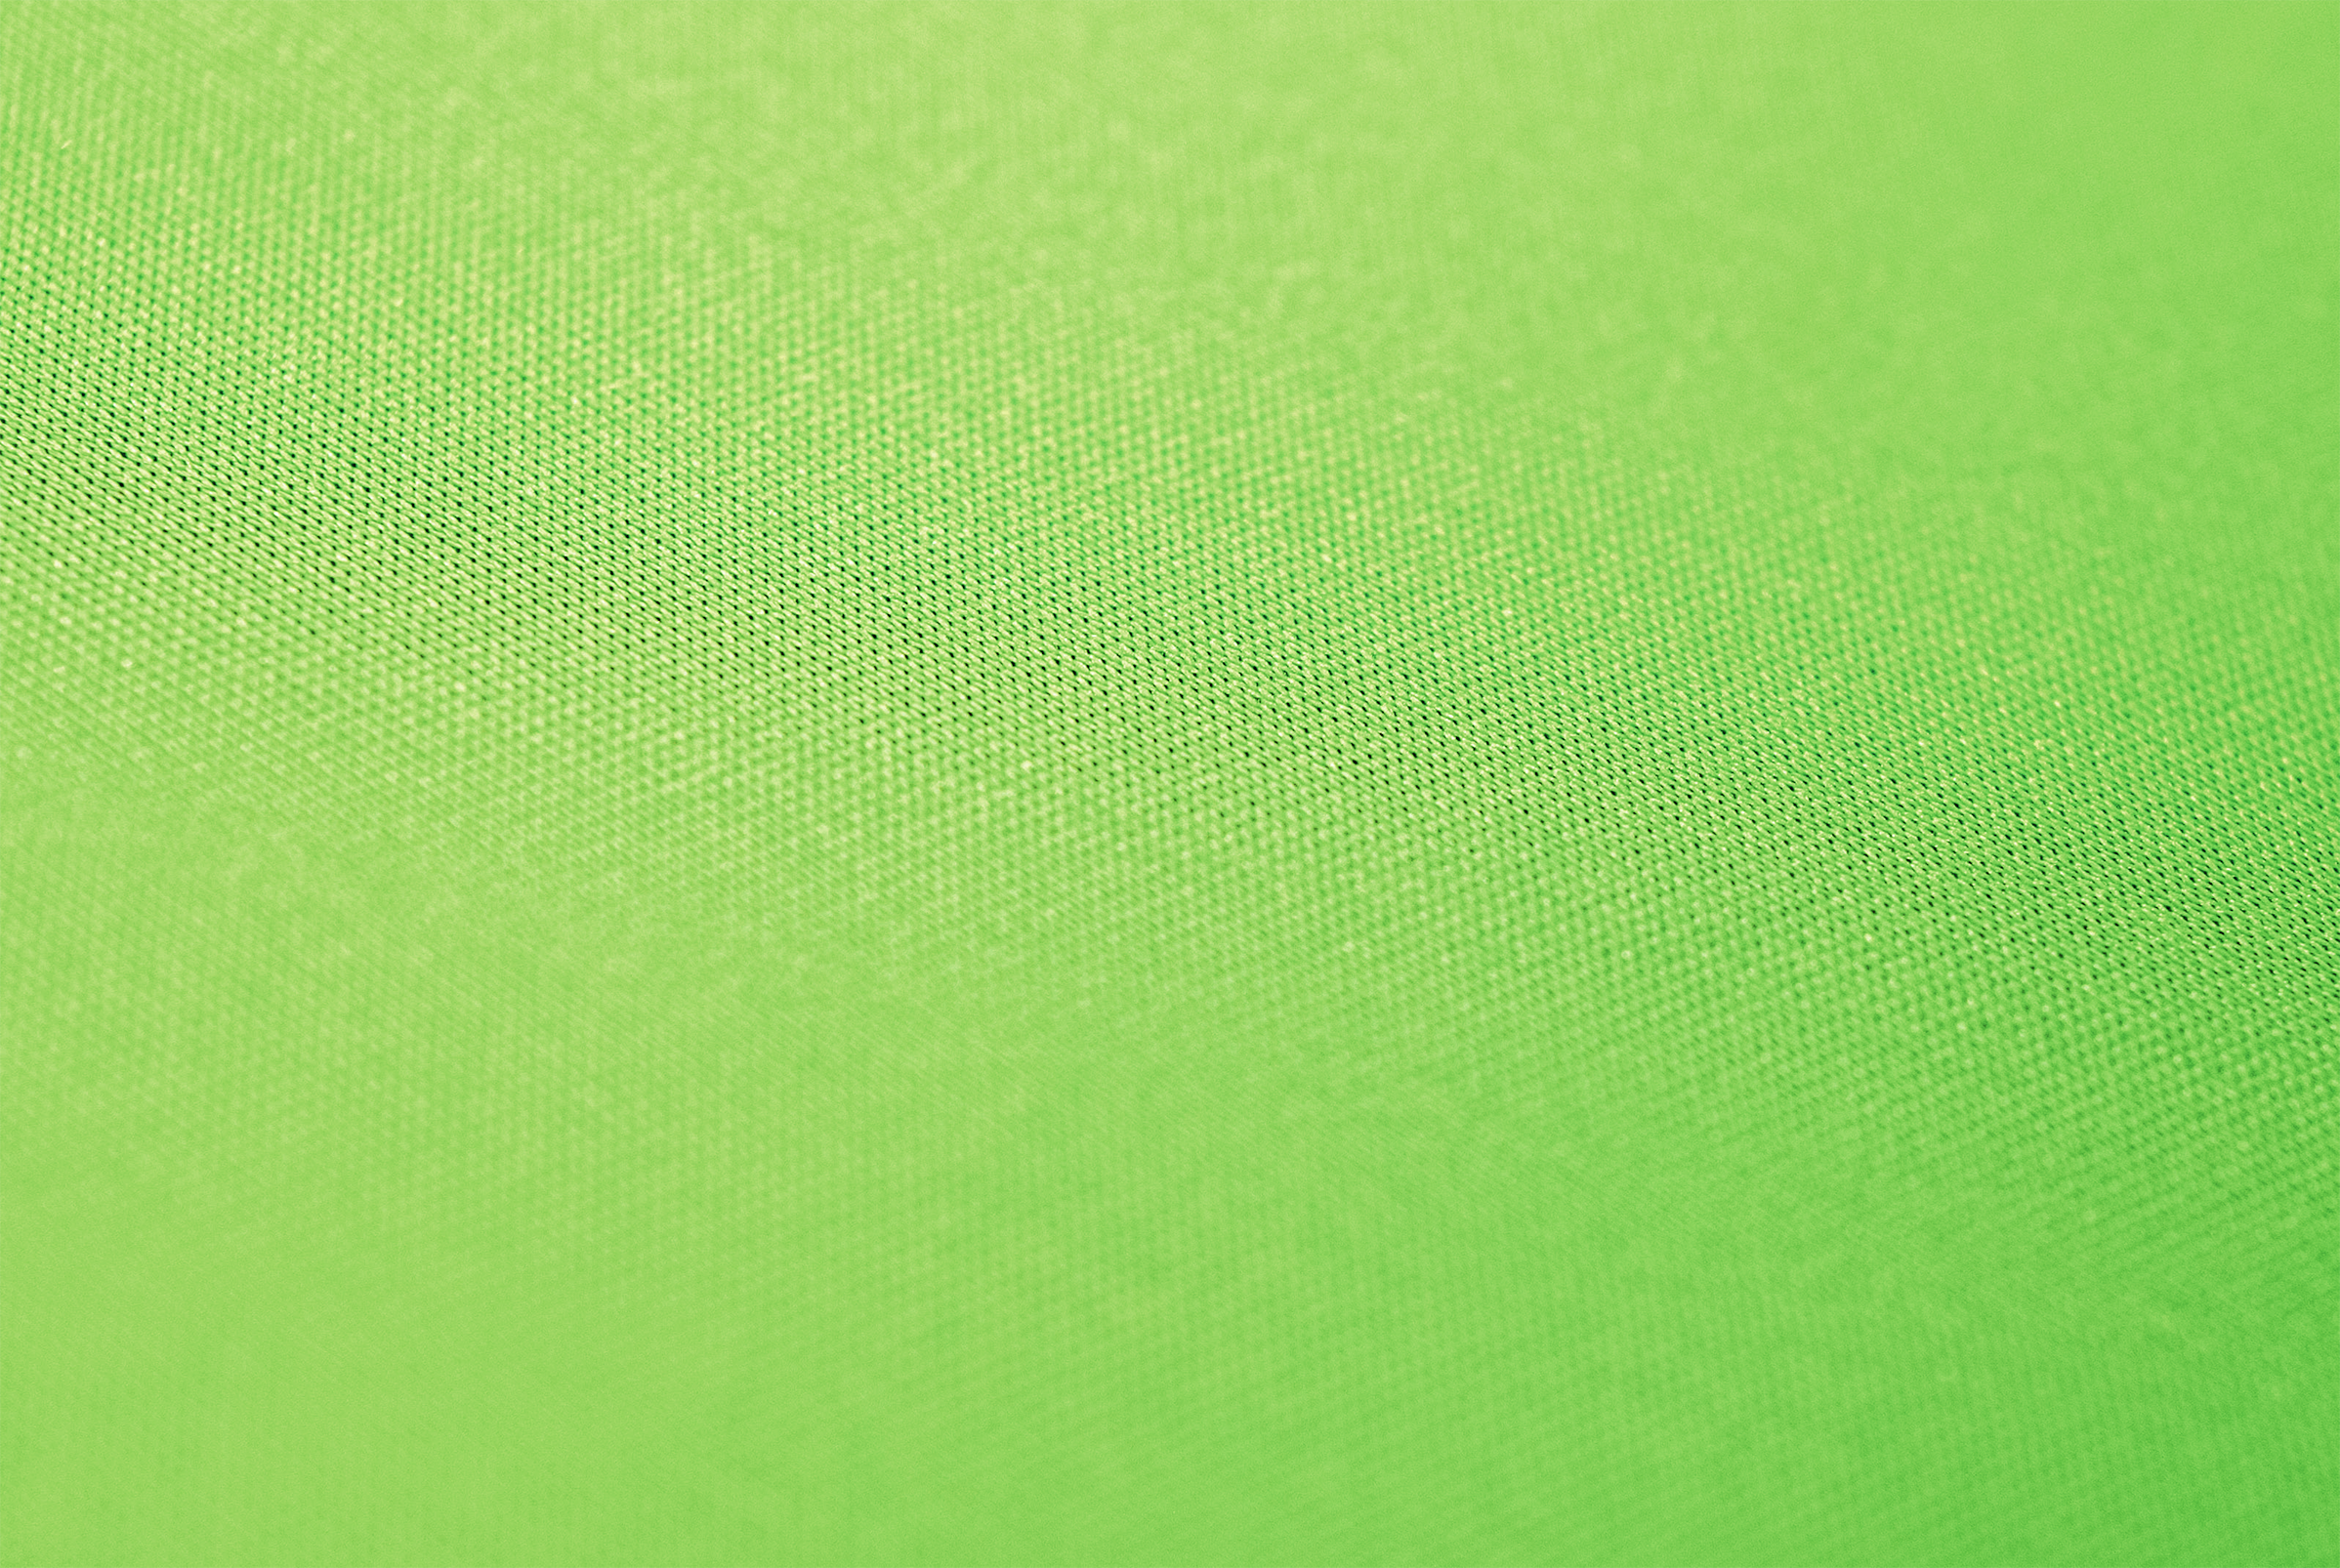 Pixio Green Screen Mouse Mat